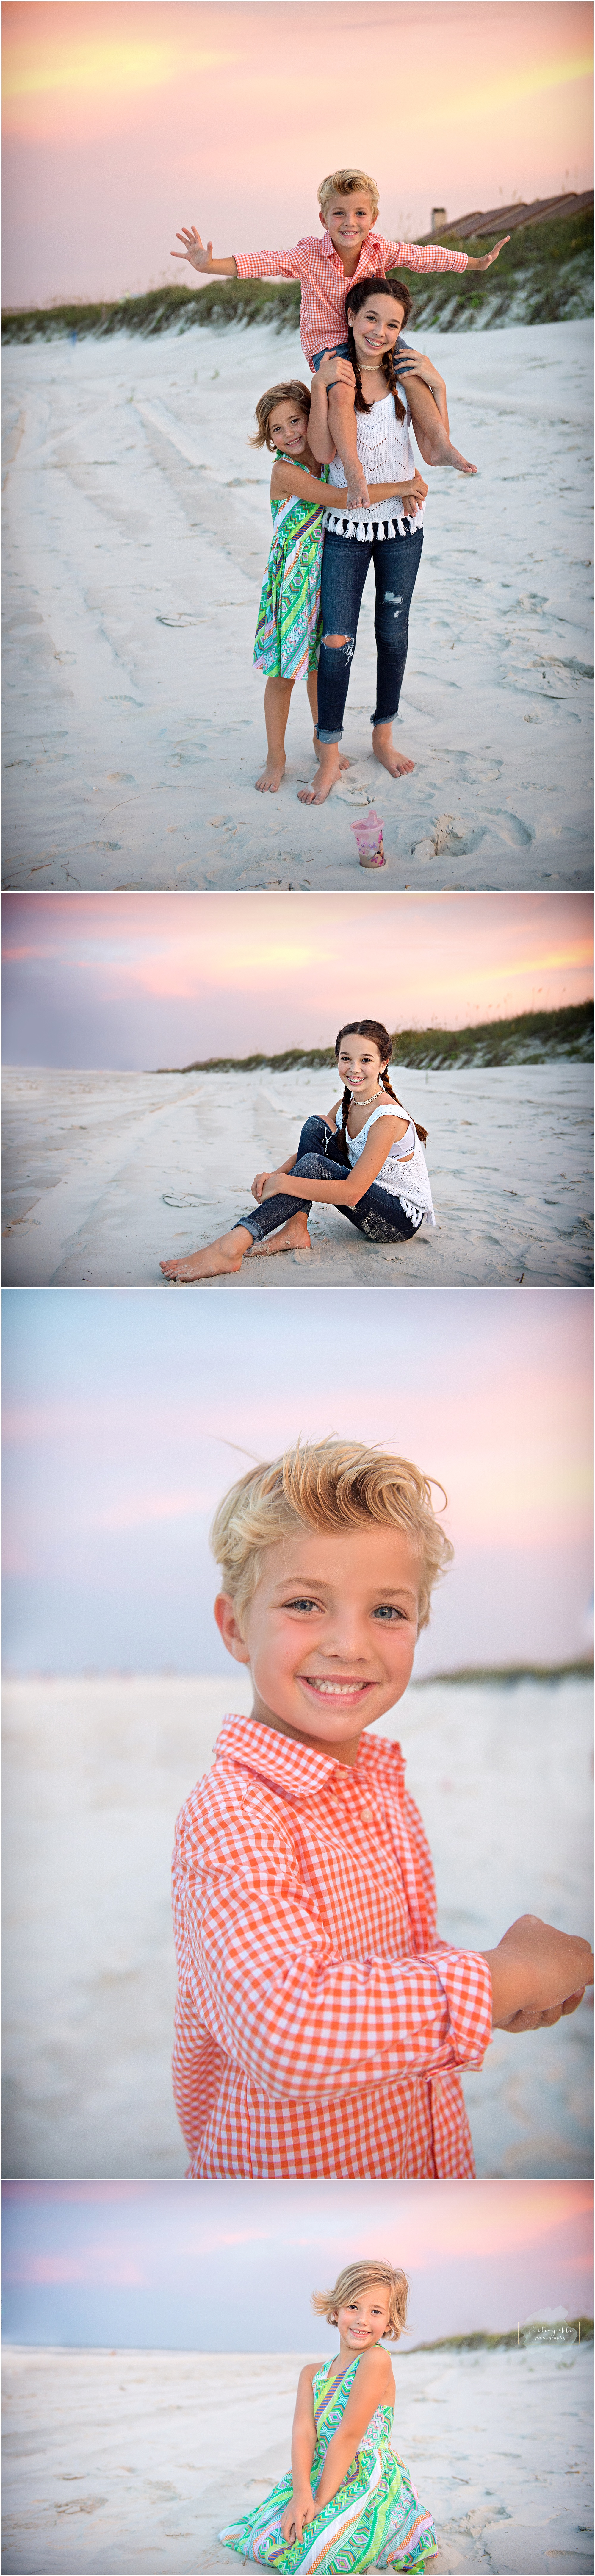 Florida-beach-portraits-photographer